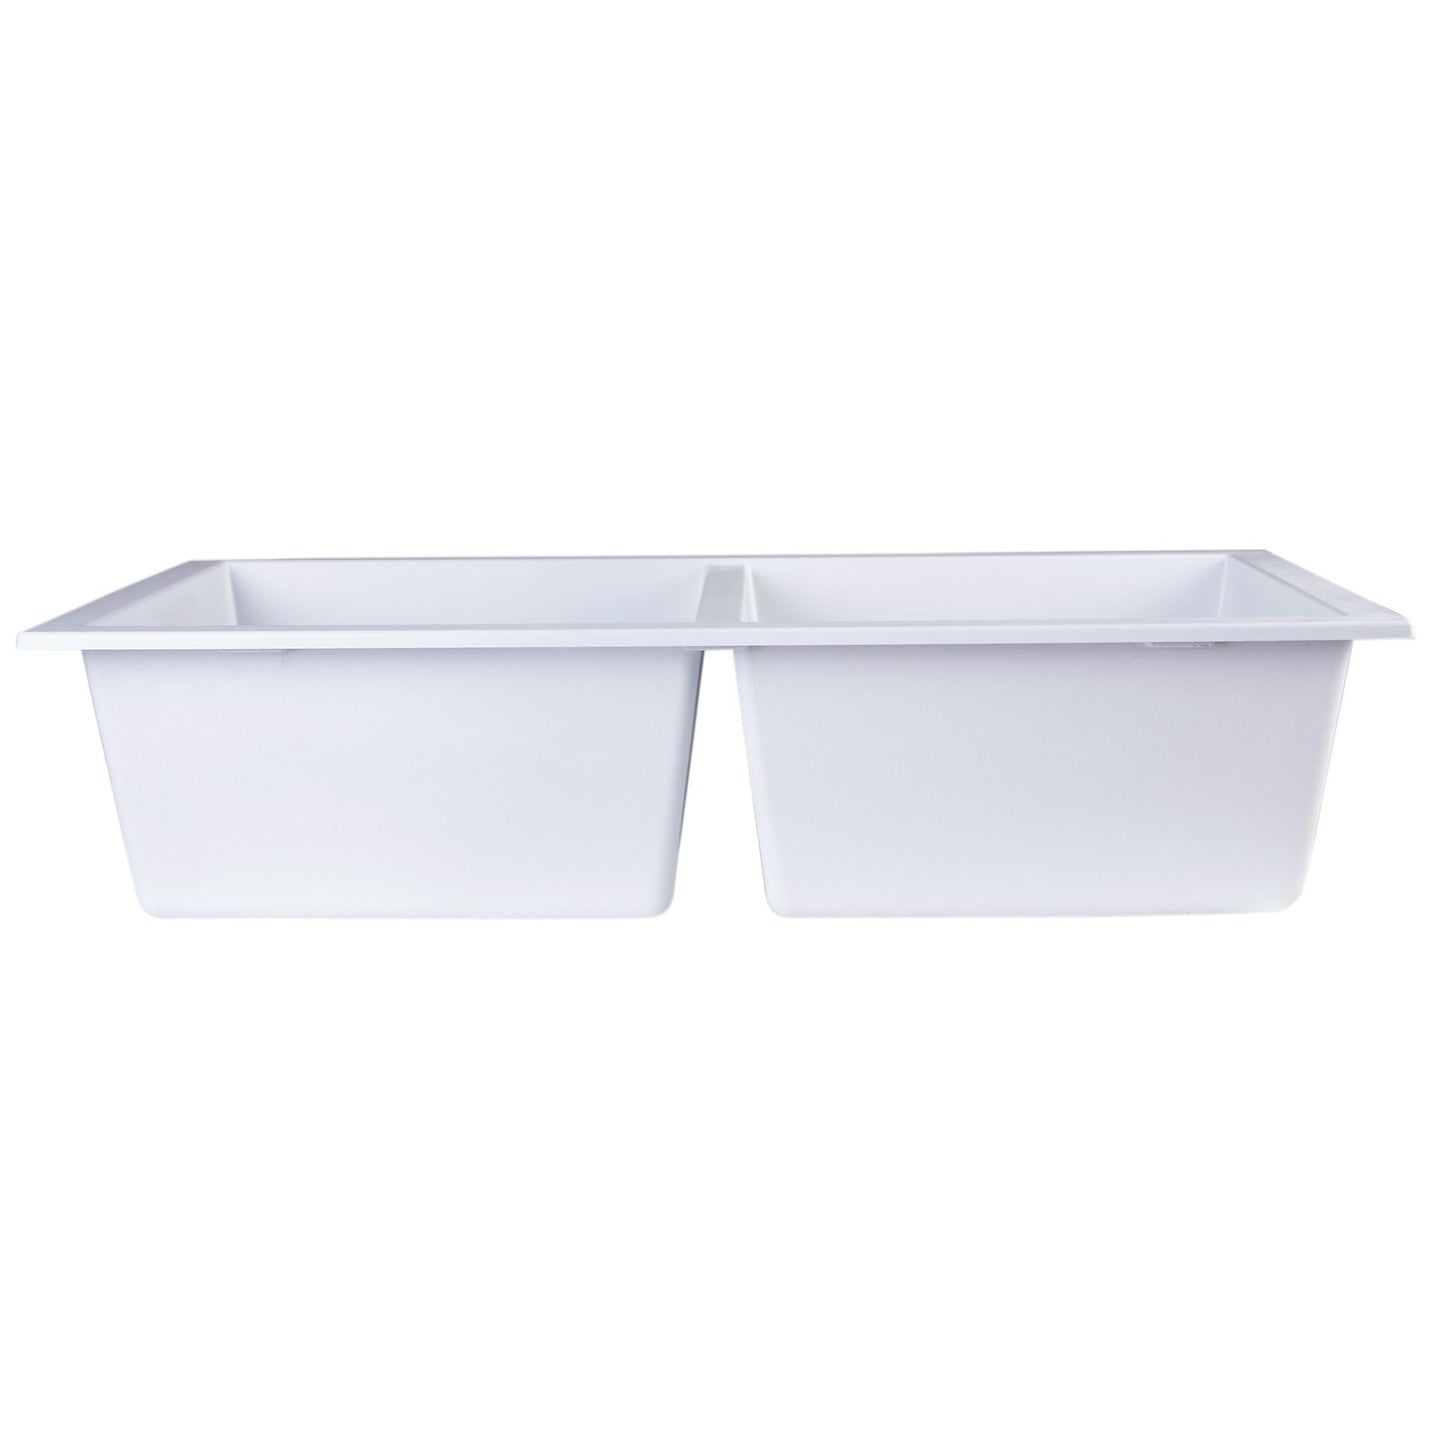 ALFI Brand AB3420UM-W White 34" Undermount Double Bowl Granite Composite Kitchen Sink